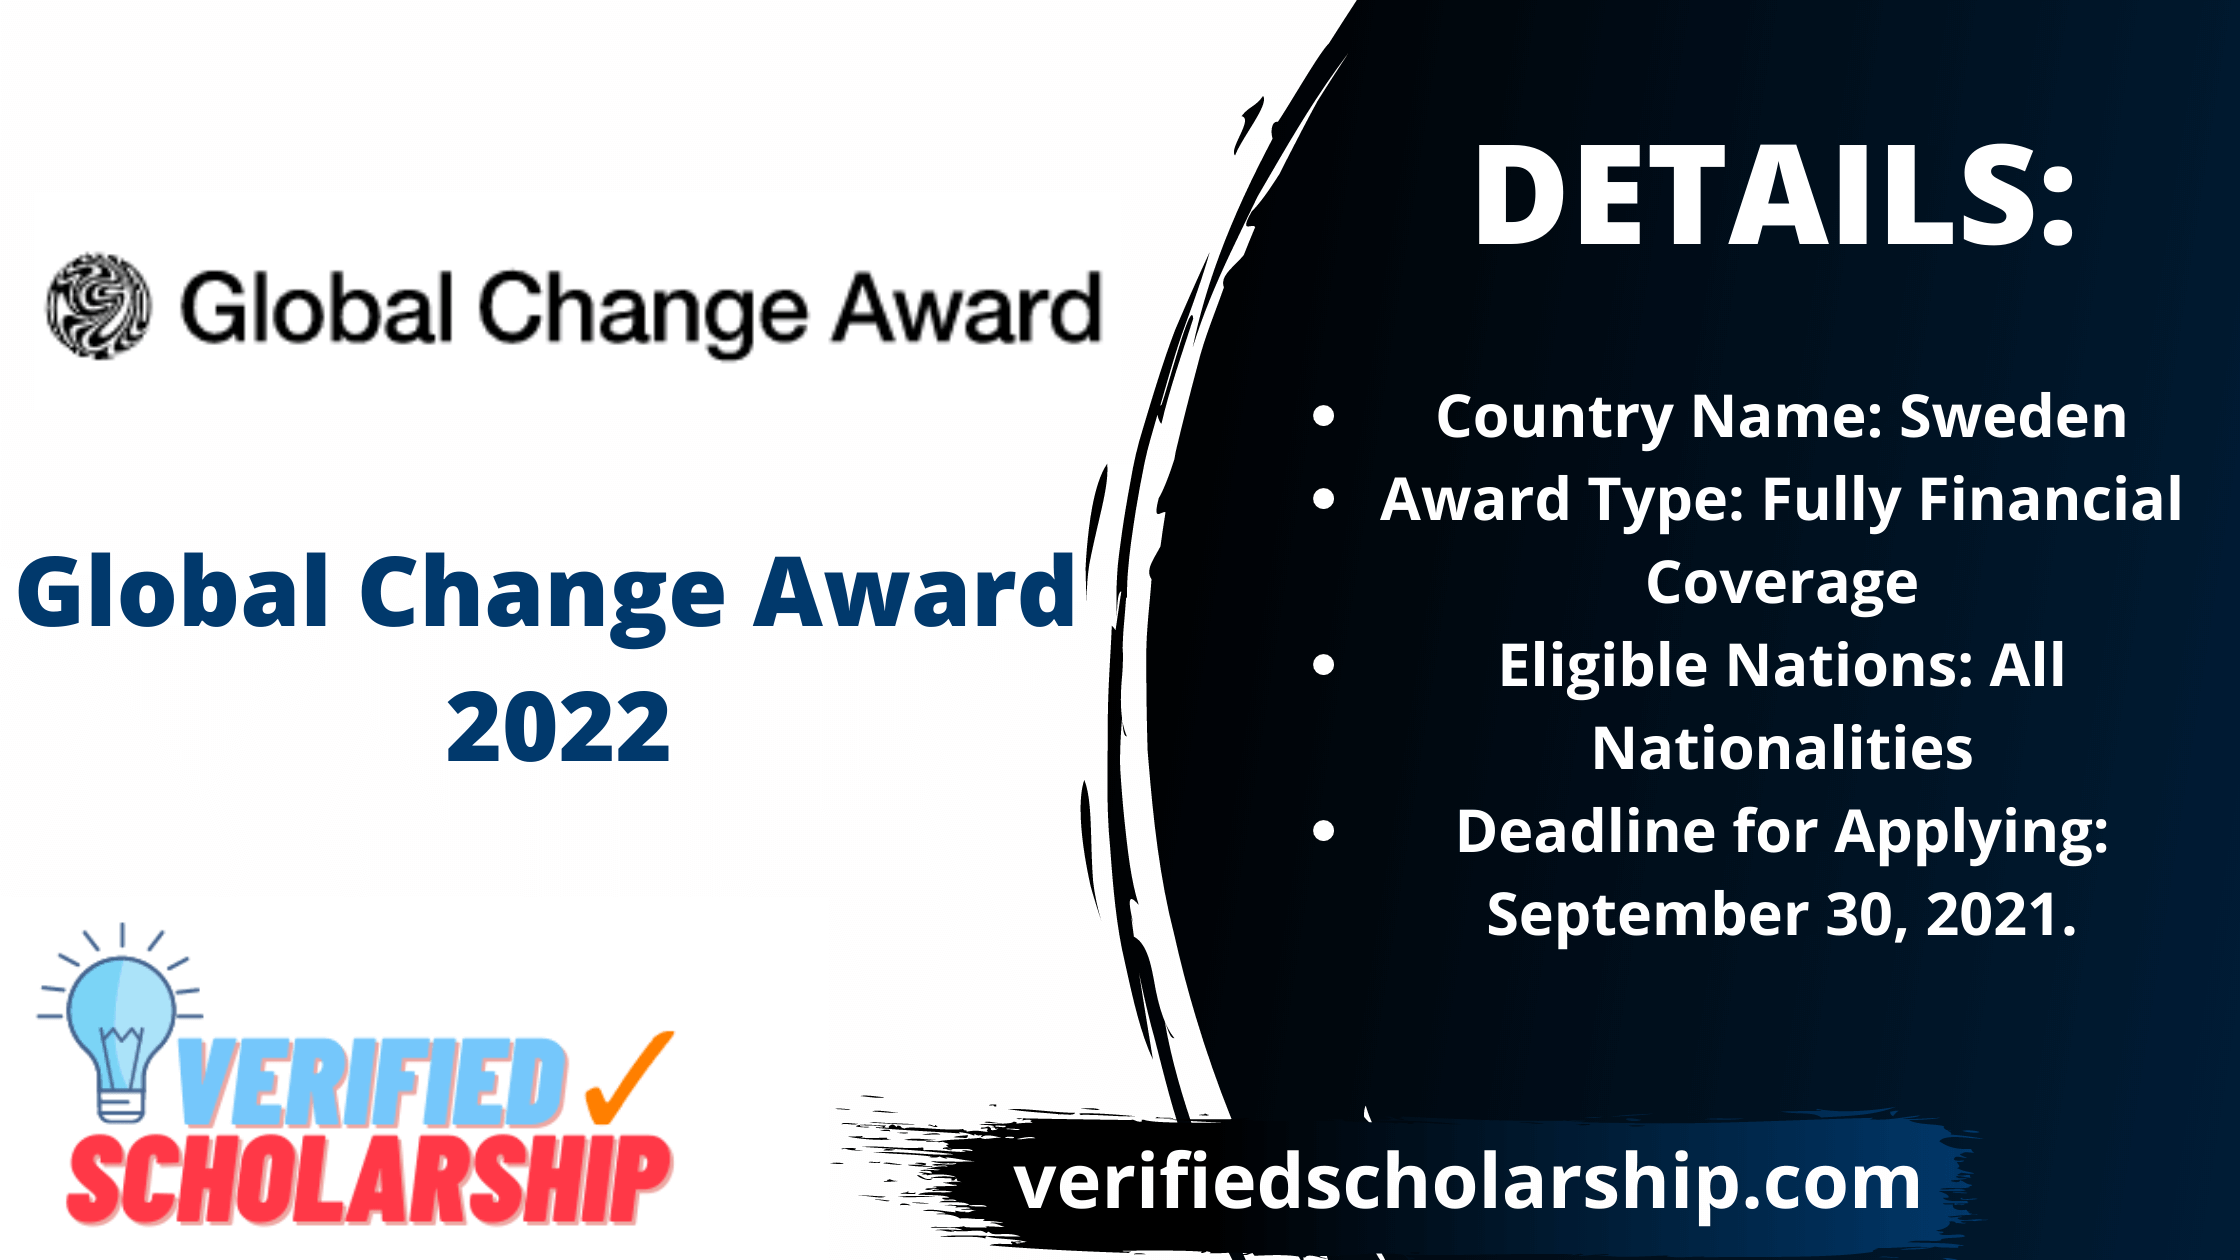 Global Change Award 2022 - Verified Scholarship